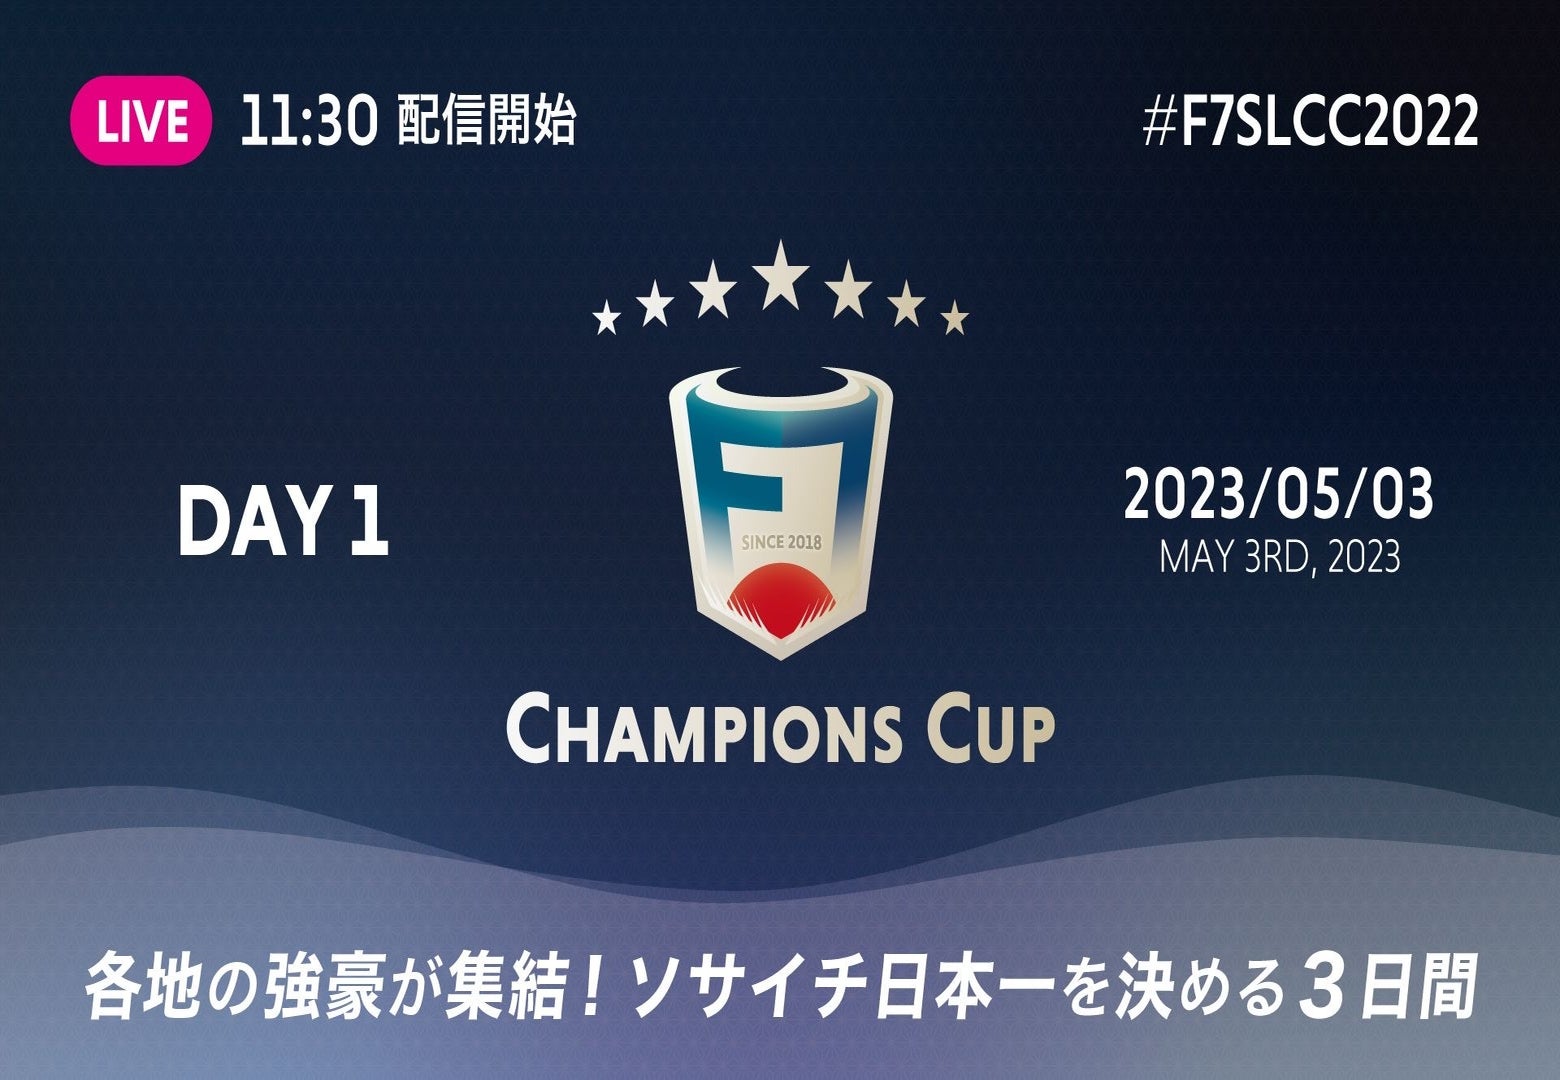 「F7SL CHAMPIONS CUP 2022」全国王者決定戦LIVE配信！ソサイチ最高峰の大会を見逃すな！#F7SL #F7SLCC2022 #ソサイチ日本イチ